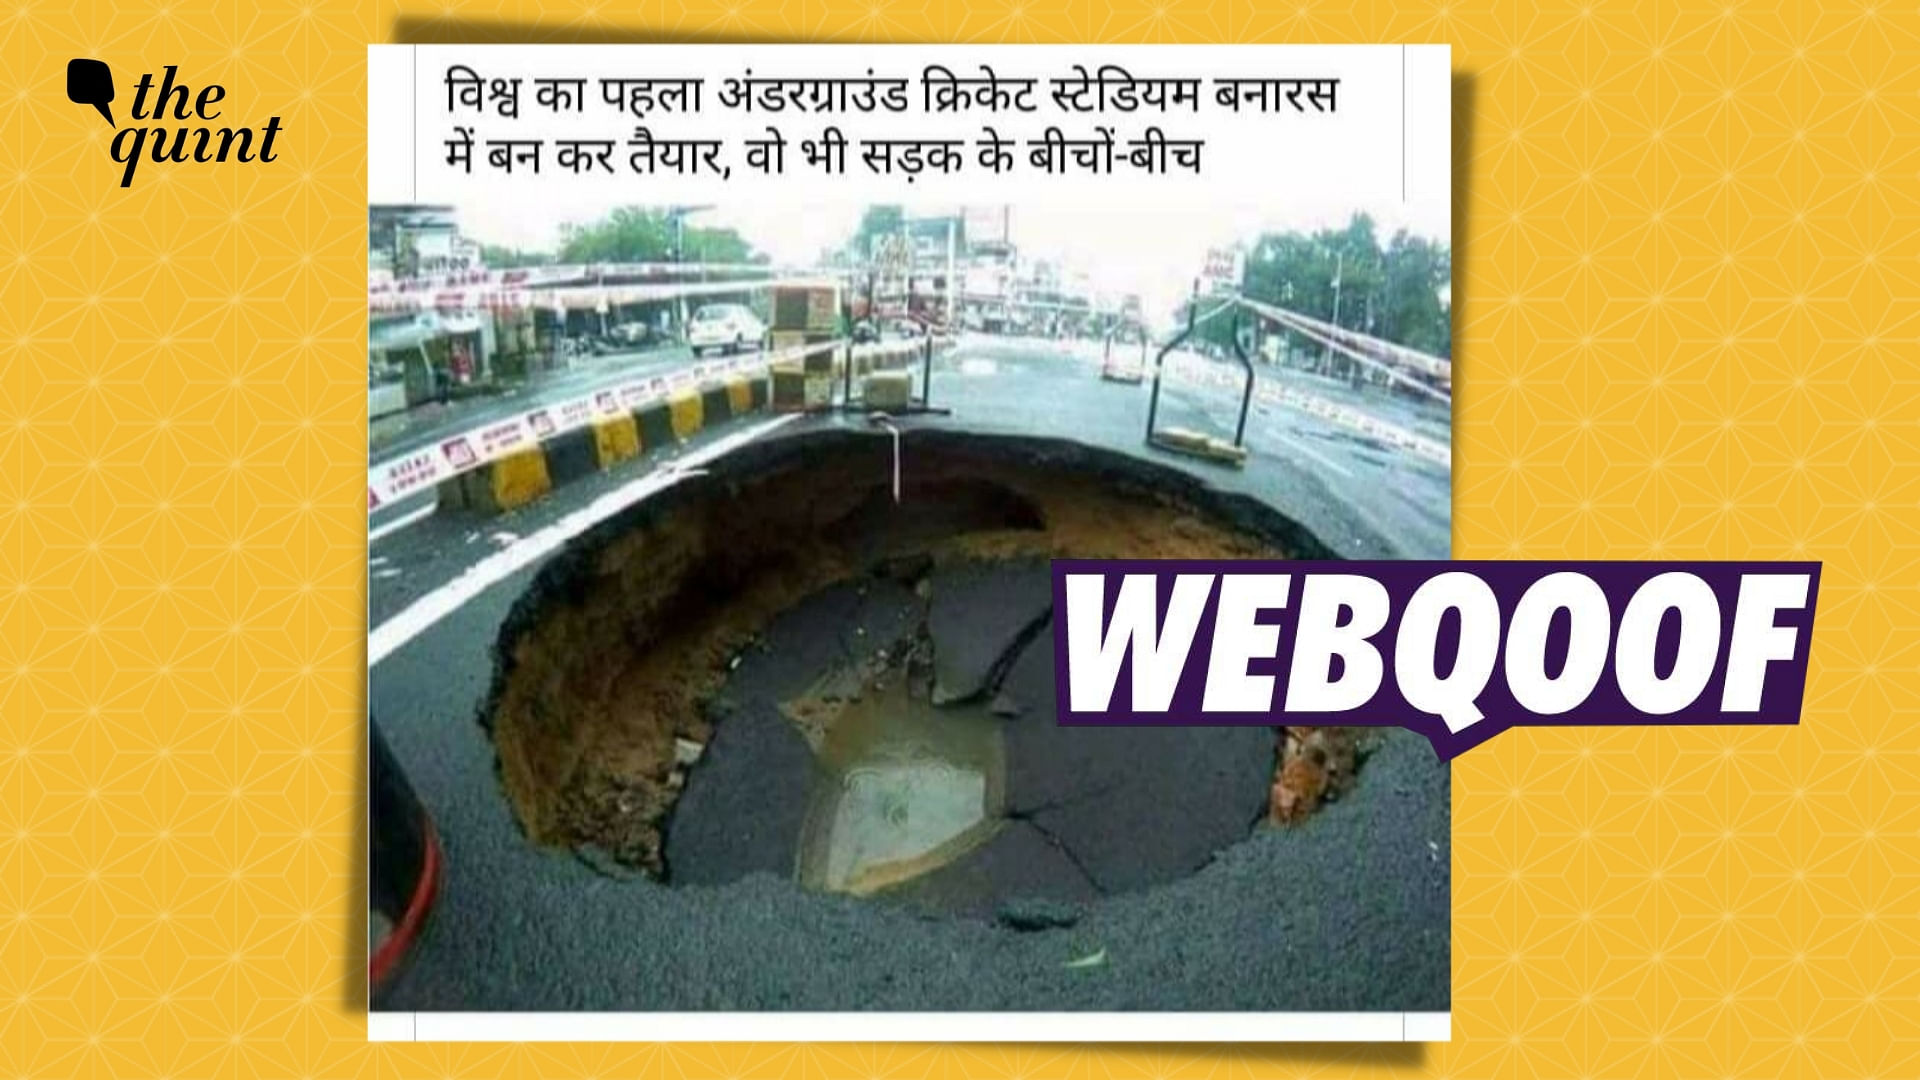 <div class="paragraphs"><p>The claim says that the sinkhole photo is from Varanasi, Uttar Pradesh.&nbsp;</p></div>